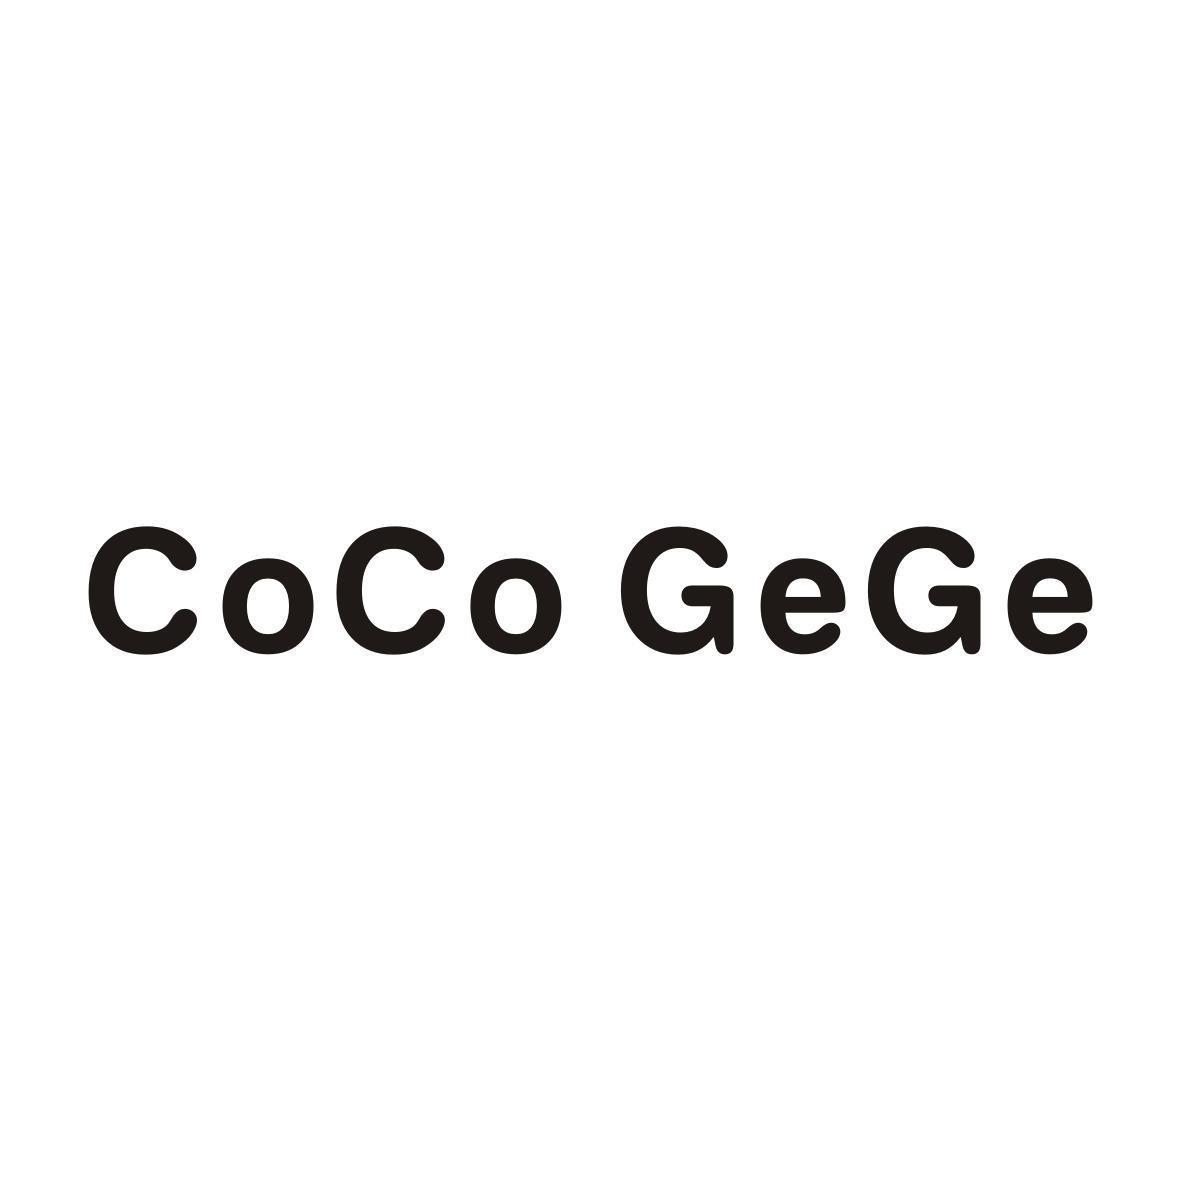 COCO GEGE